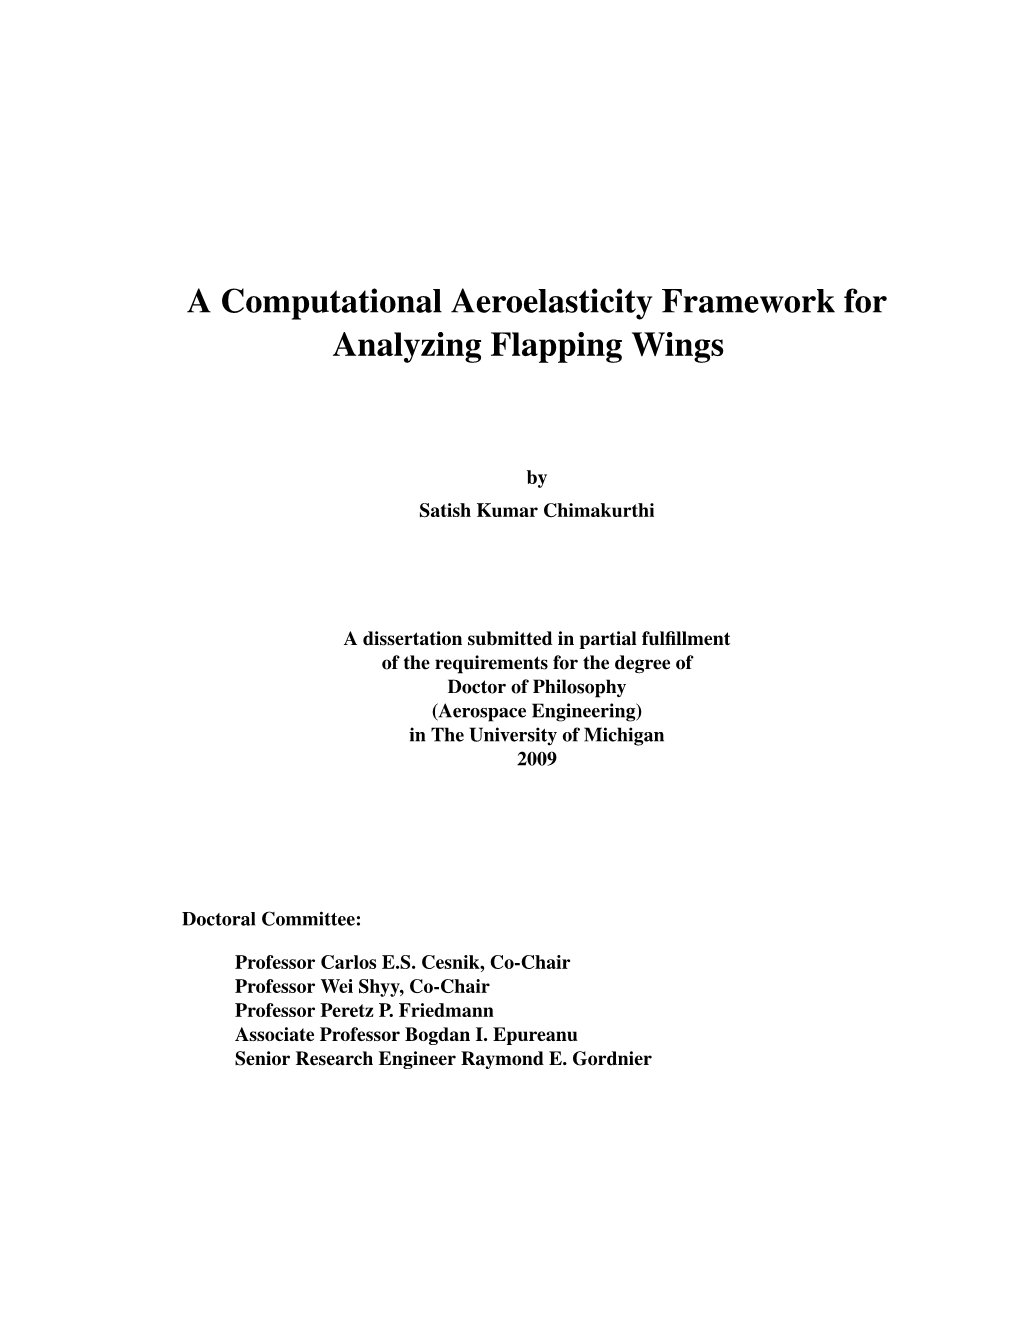 A Computational Aeroelasticity Framework for Analyzing Flapping Wings